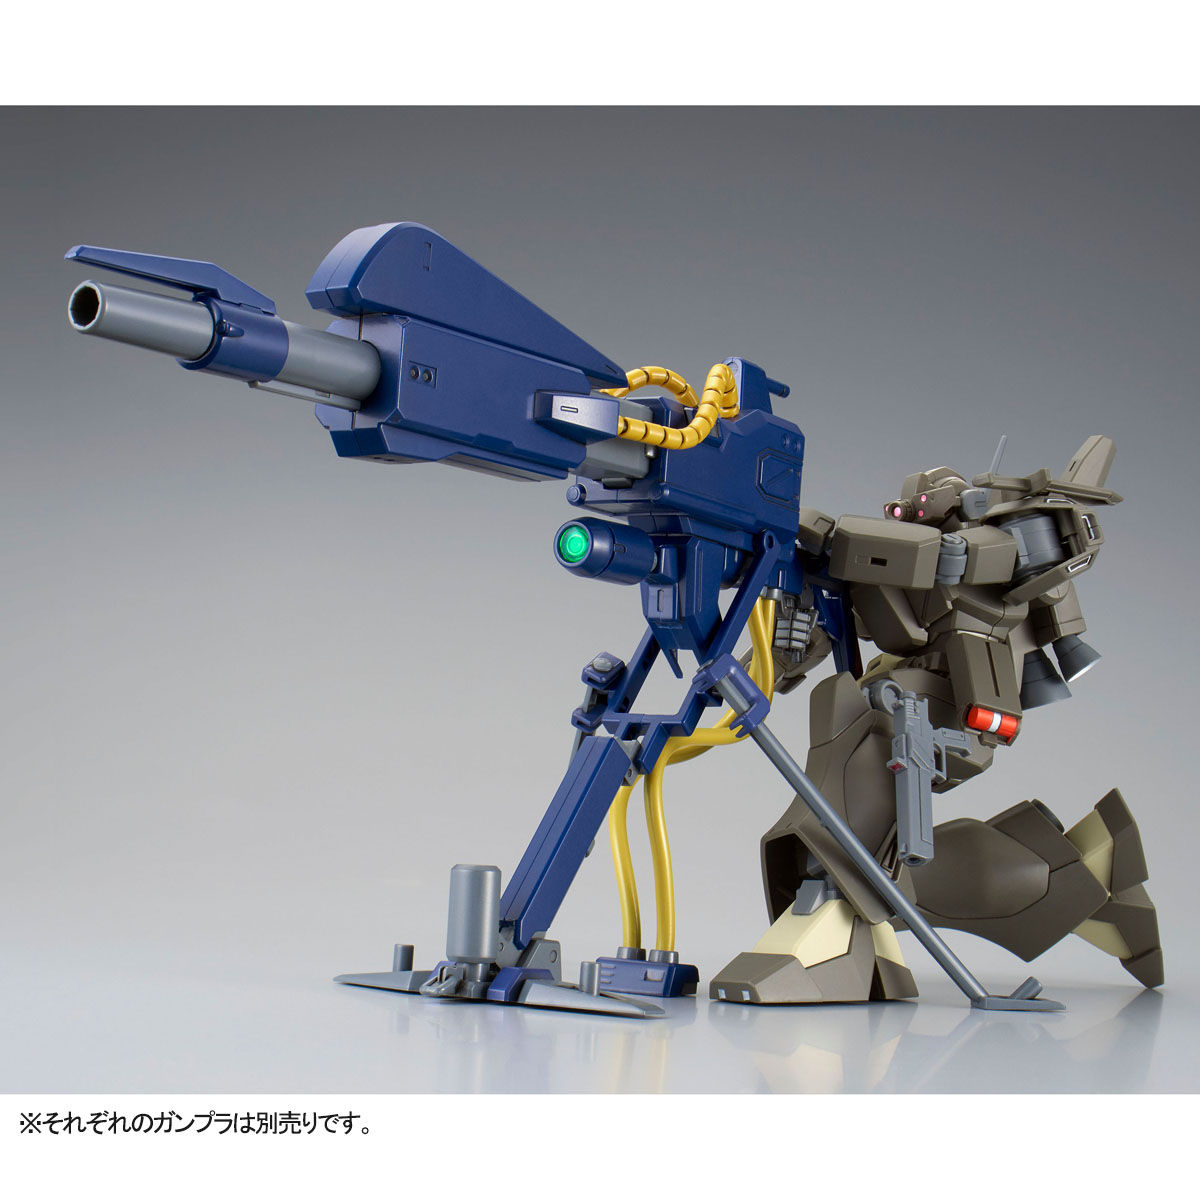 P Bandai Hguc 1 144 Mega Bazooka Launcher Conroy Release Info Gundam Kits Collection News And Reviews